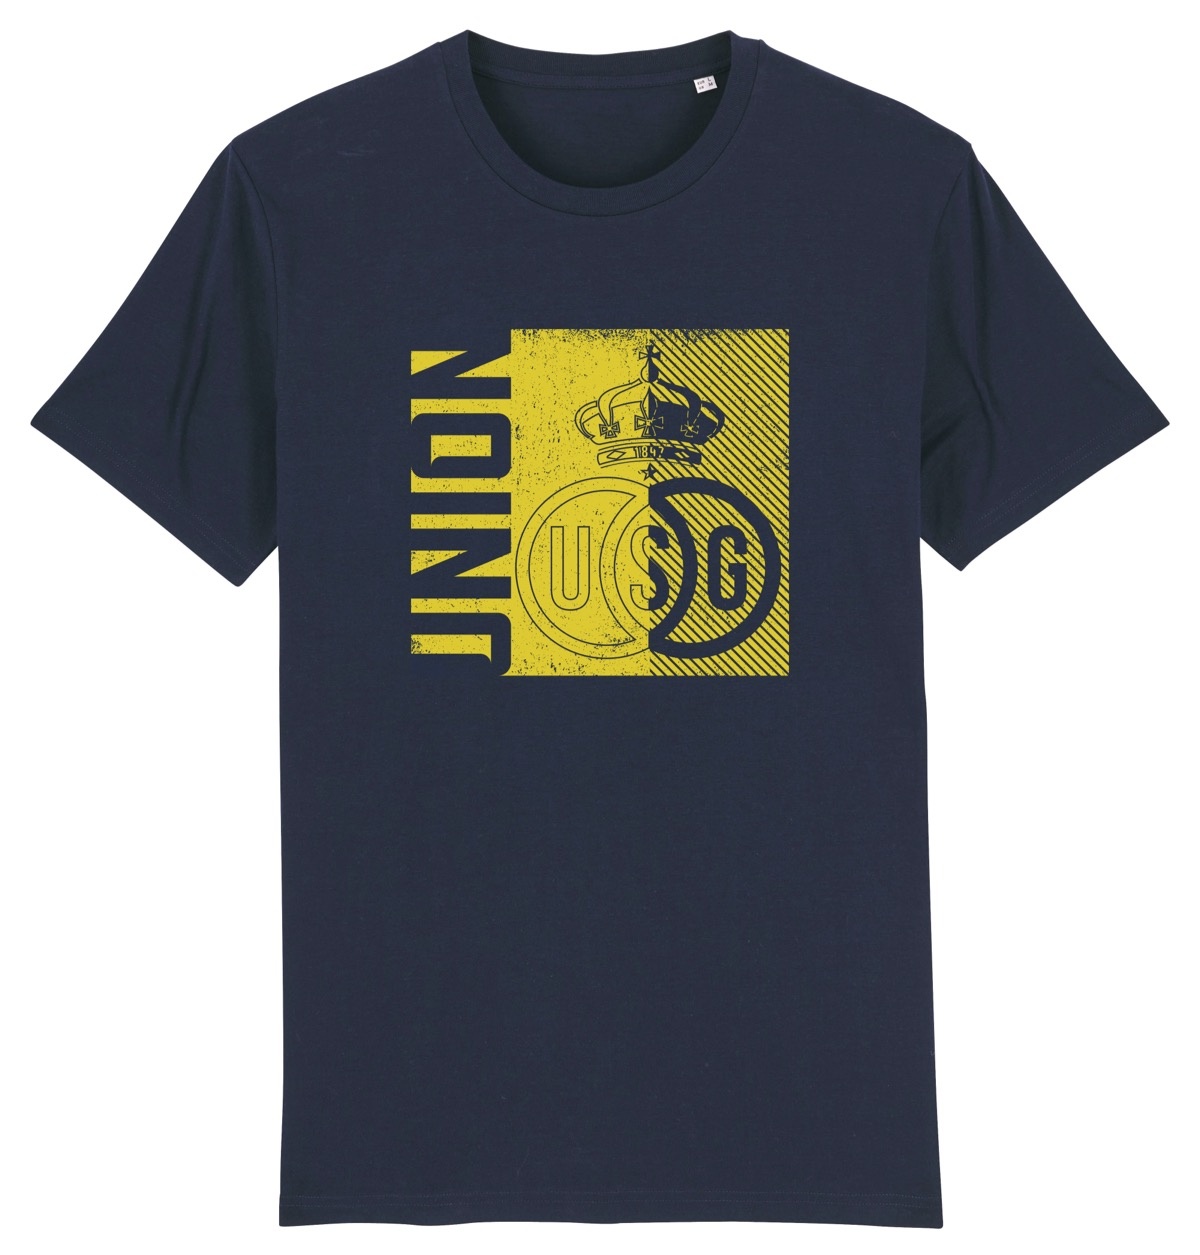 Topfanz T- shirt blue Union yellow streetwear